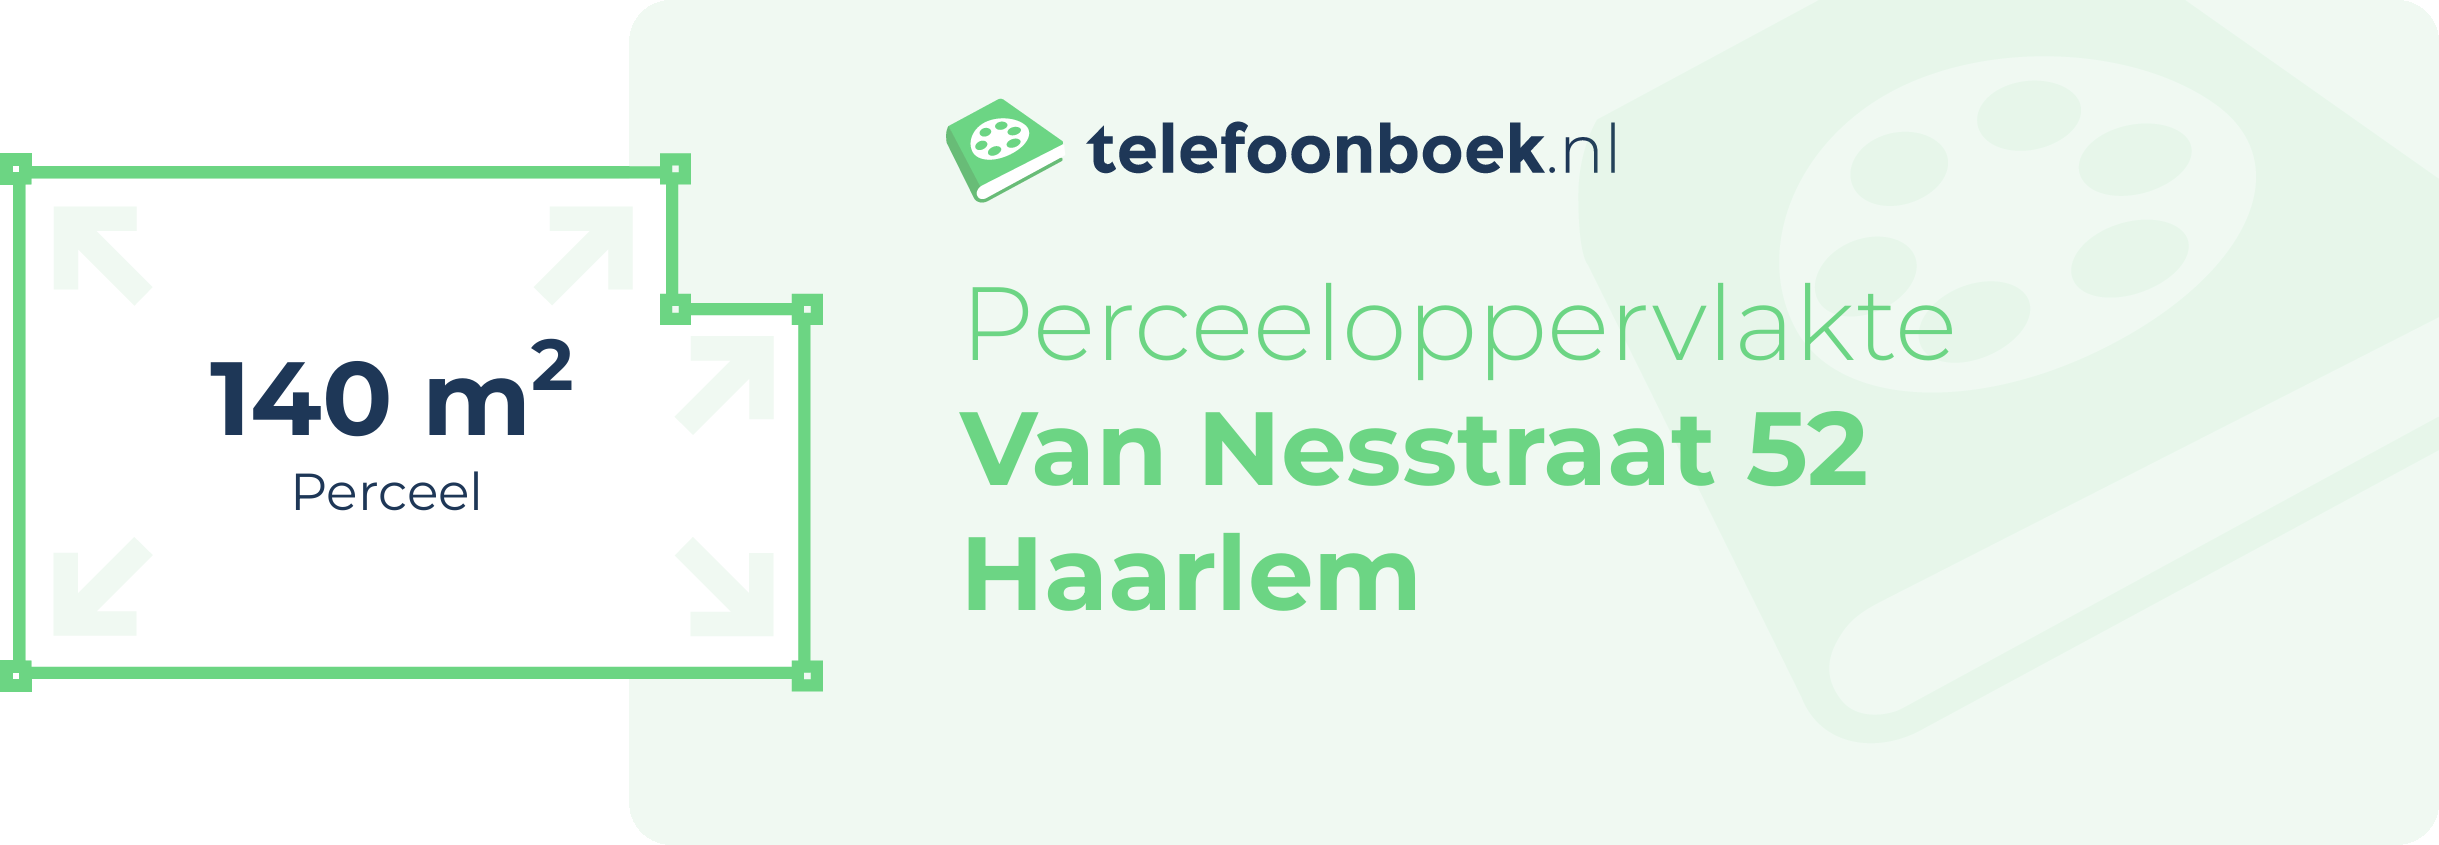 Perceeloppervlakte Van Nesstraat 52 Haarlem